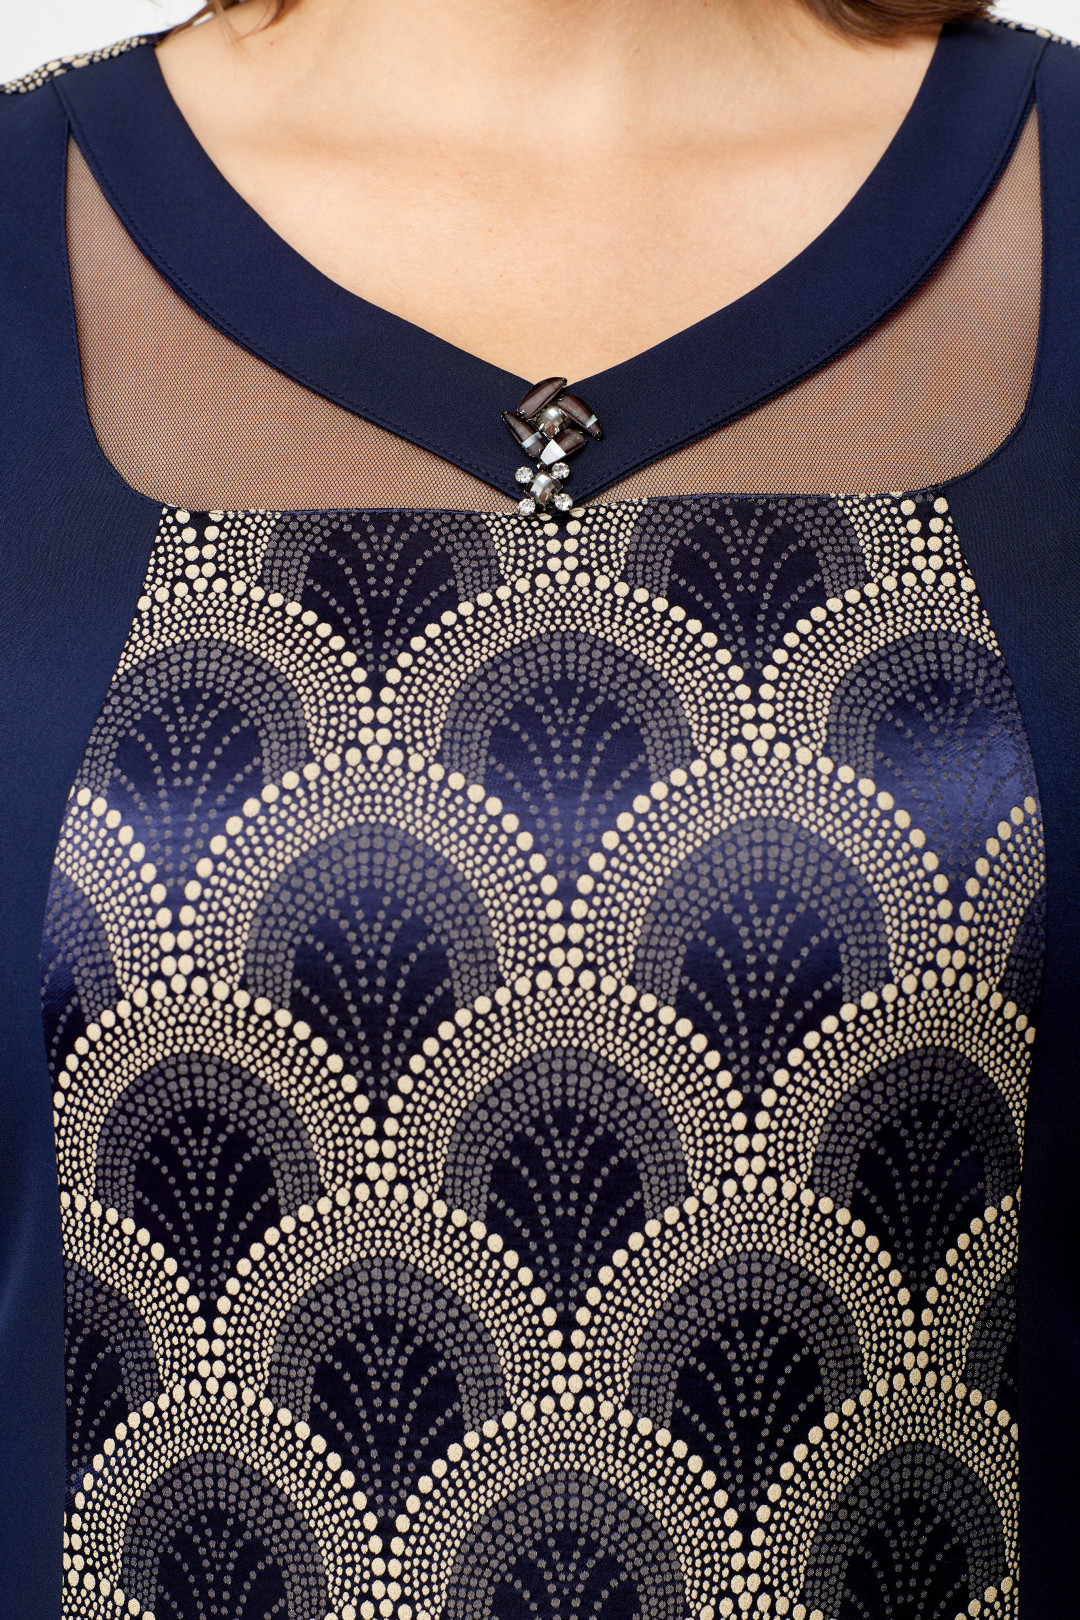 Платье Мода-Версаль 1549 чешуя